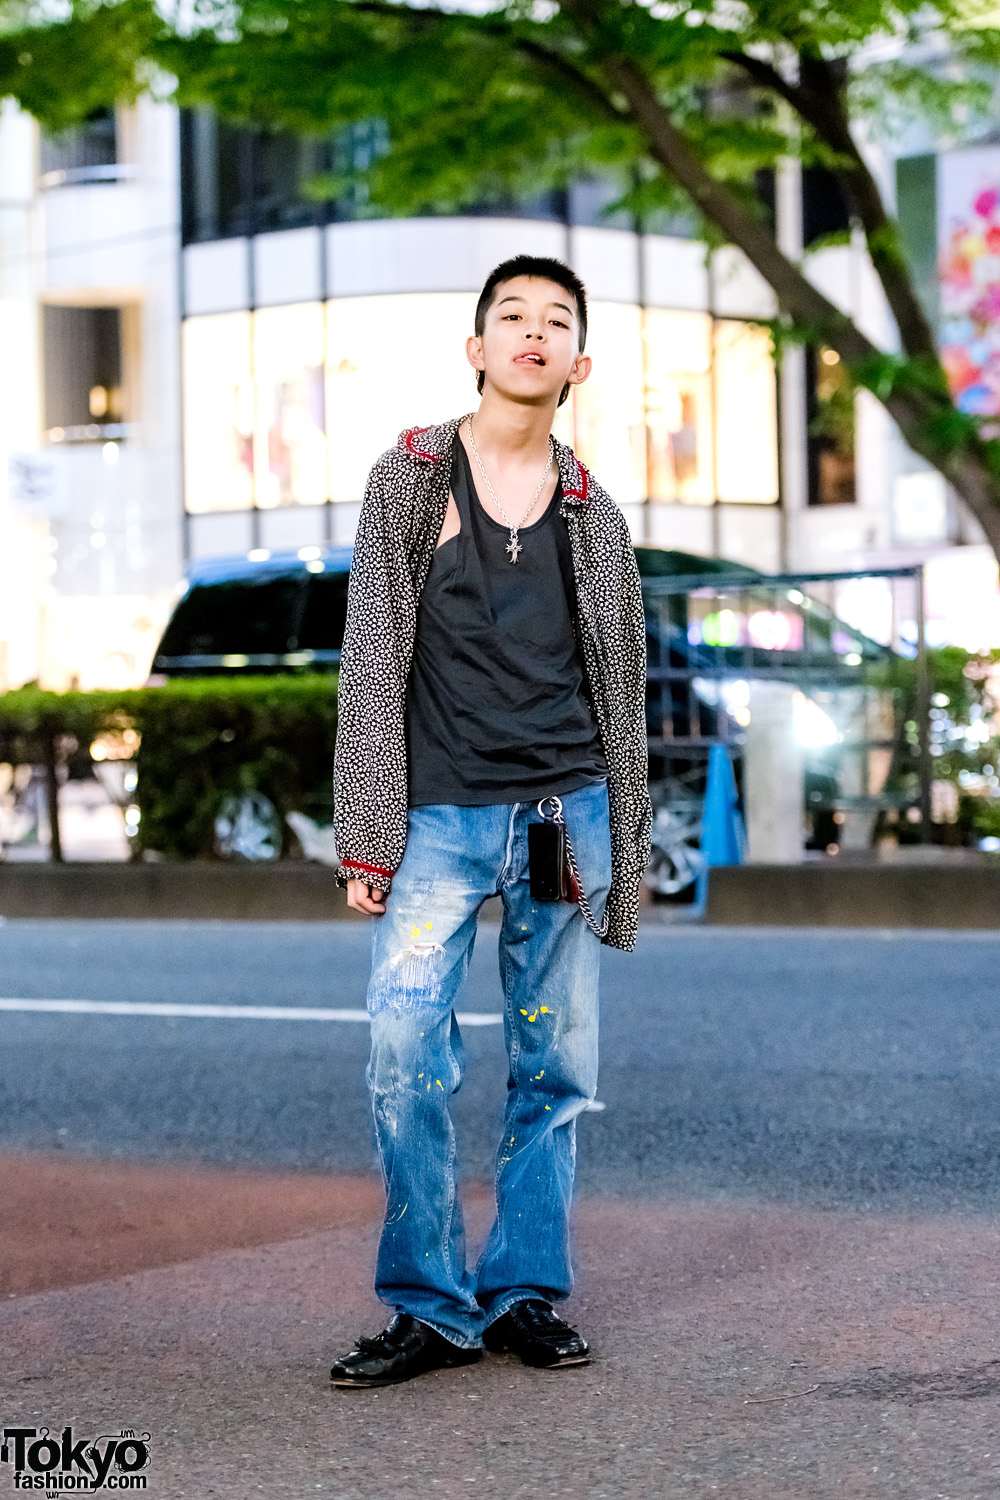 Harajuku Teen's Street Style w/ Gianni Versace Tops, Levi's Distressed Jeans & Vintage Tassel Loafers